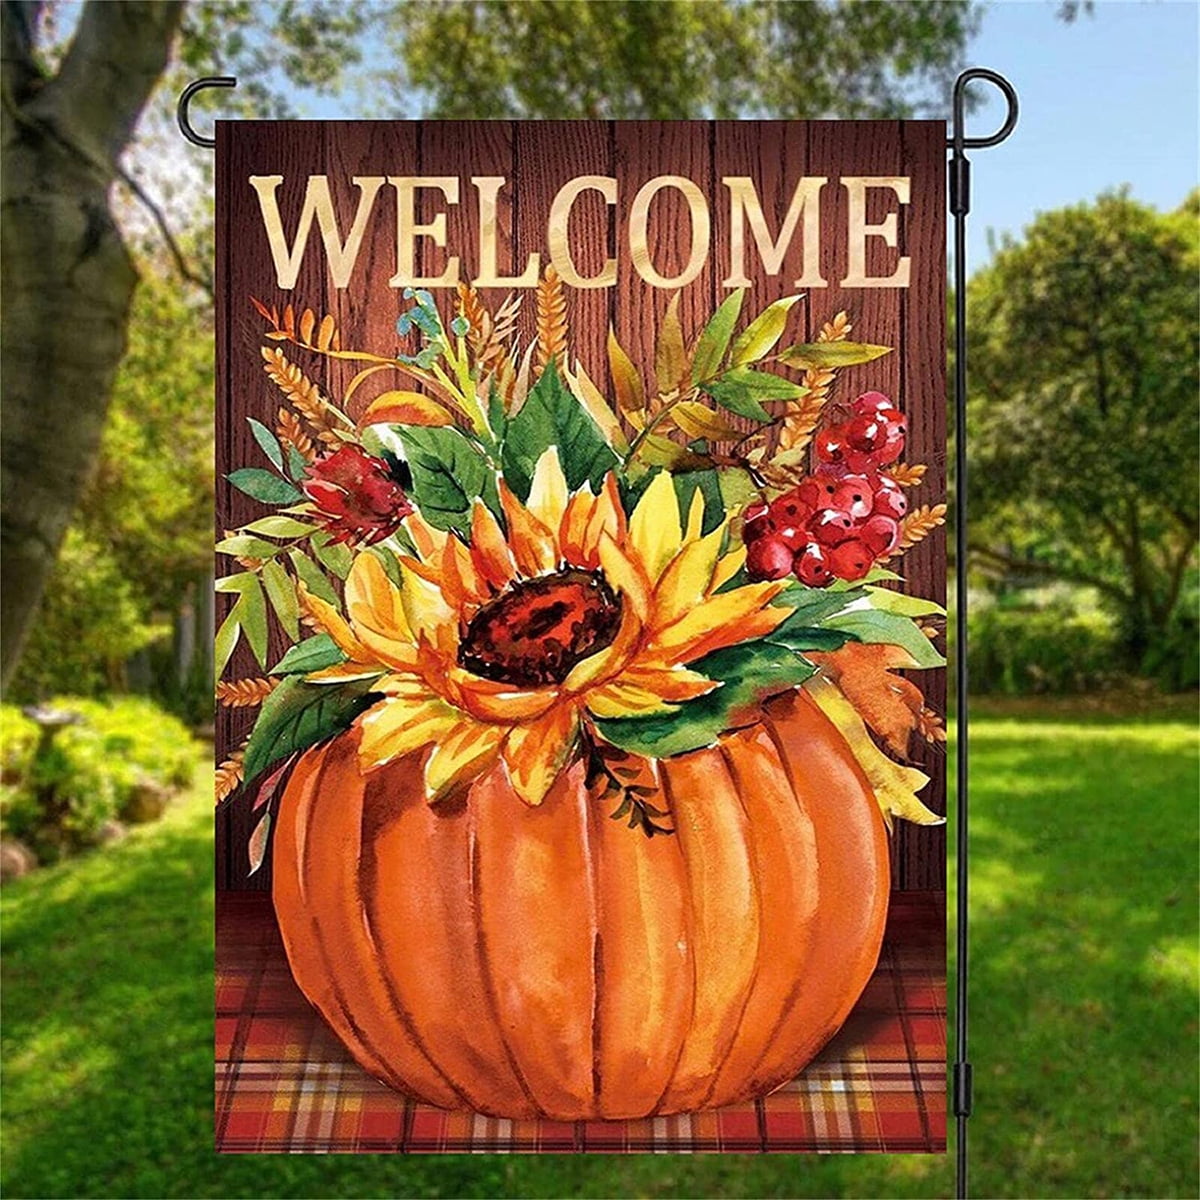 18"x12" Happy fall Halloween Pumpkin Garden Flag Yard Banner Outdoor Decor 